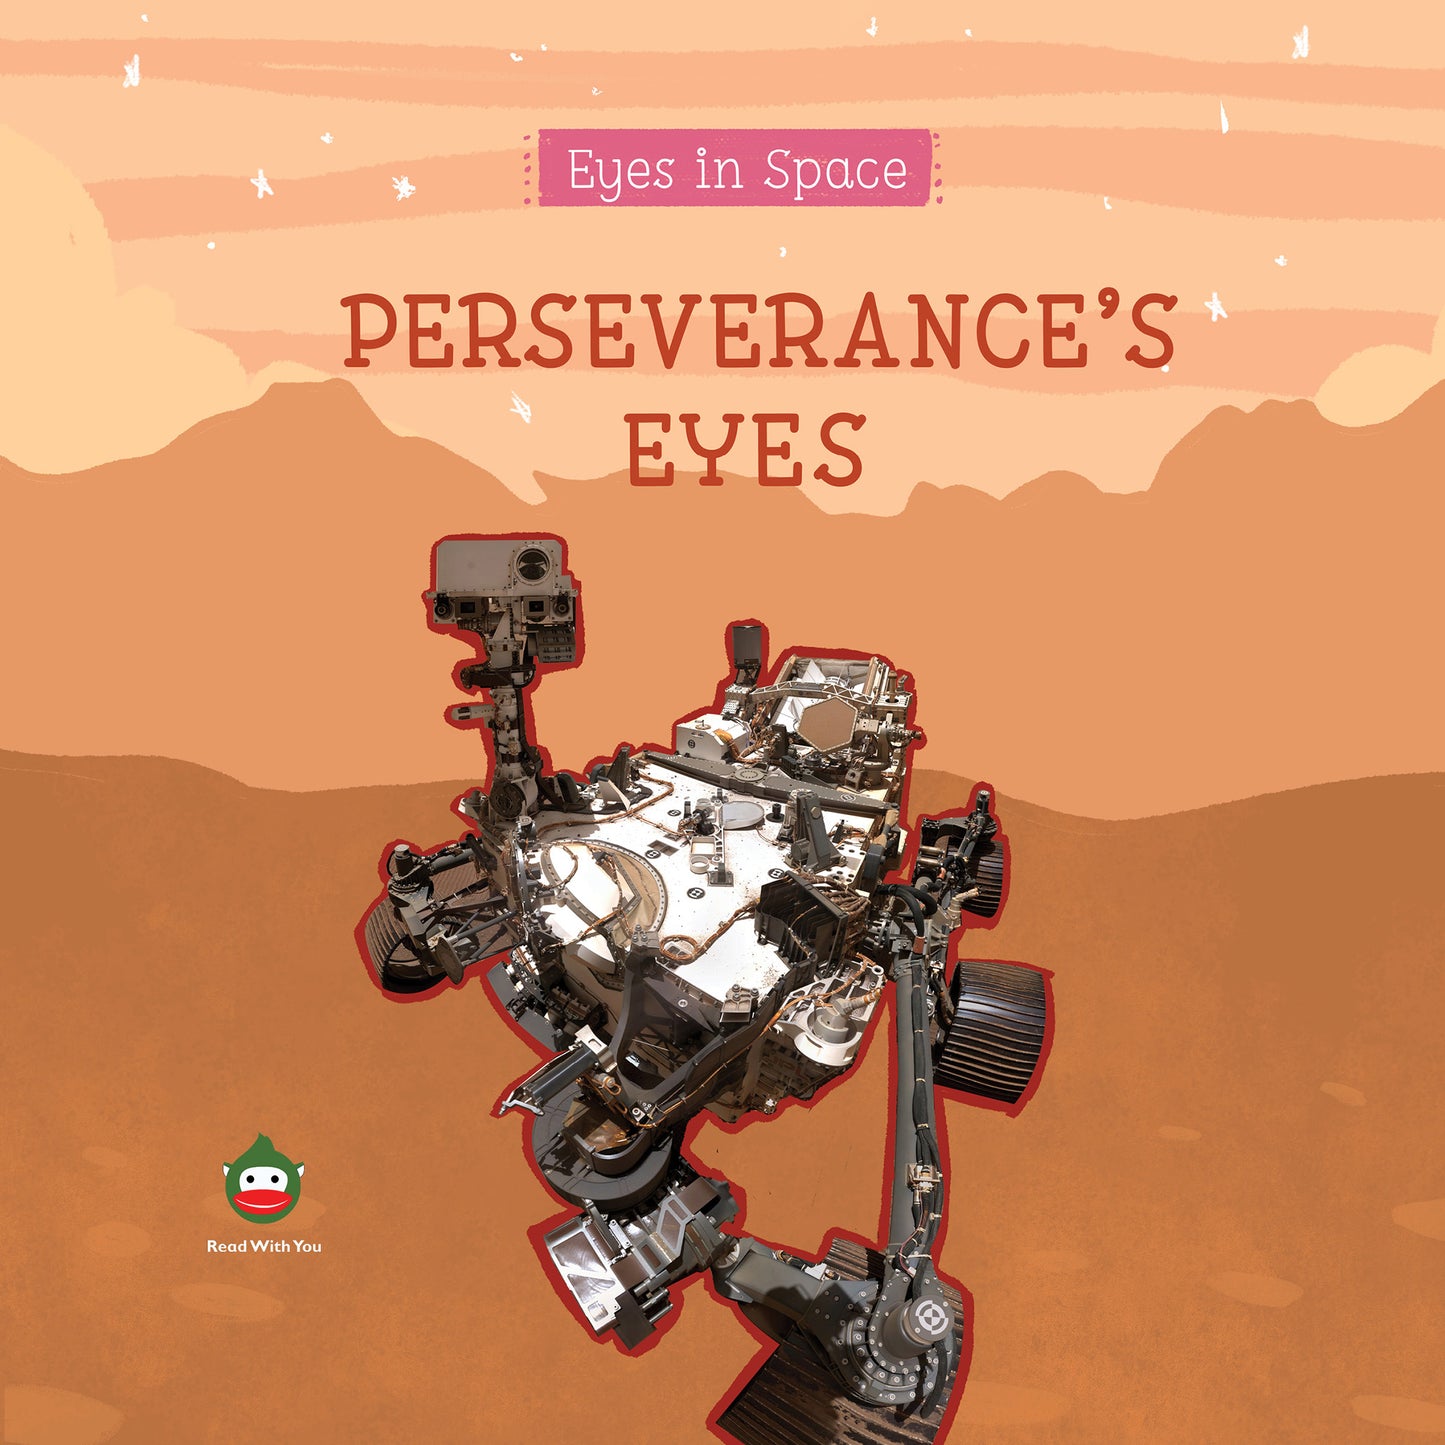 Perseverance's Eyes